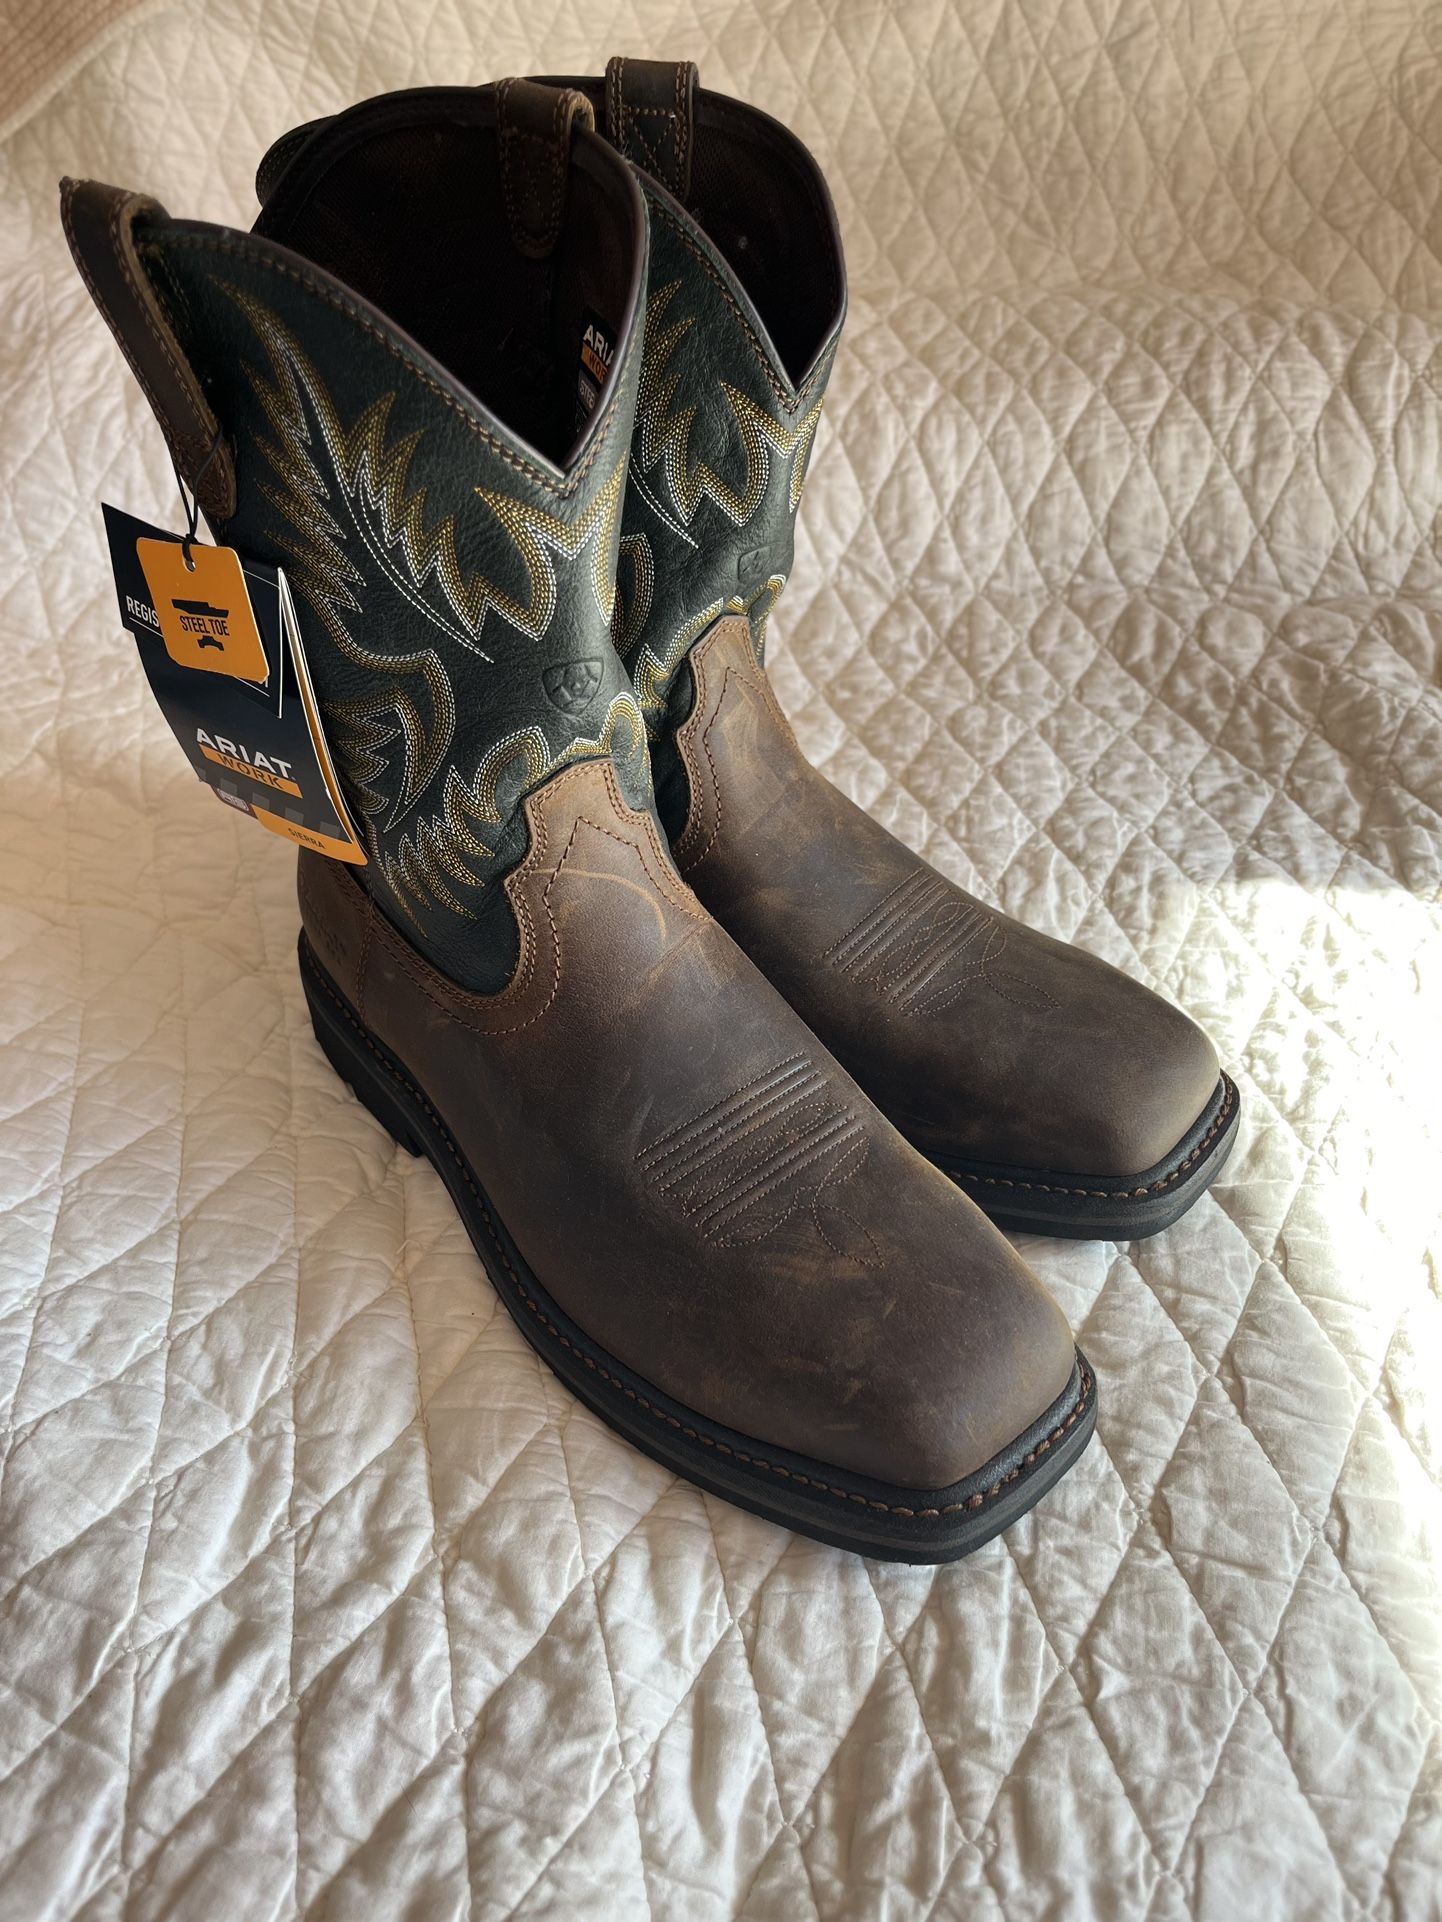 New Men’s Ariat Boots Size 13 Steel Toe 